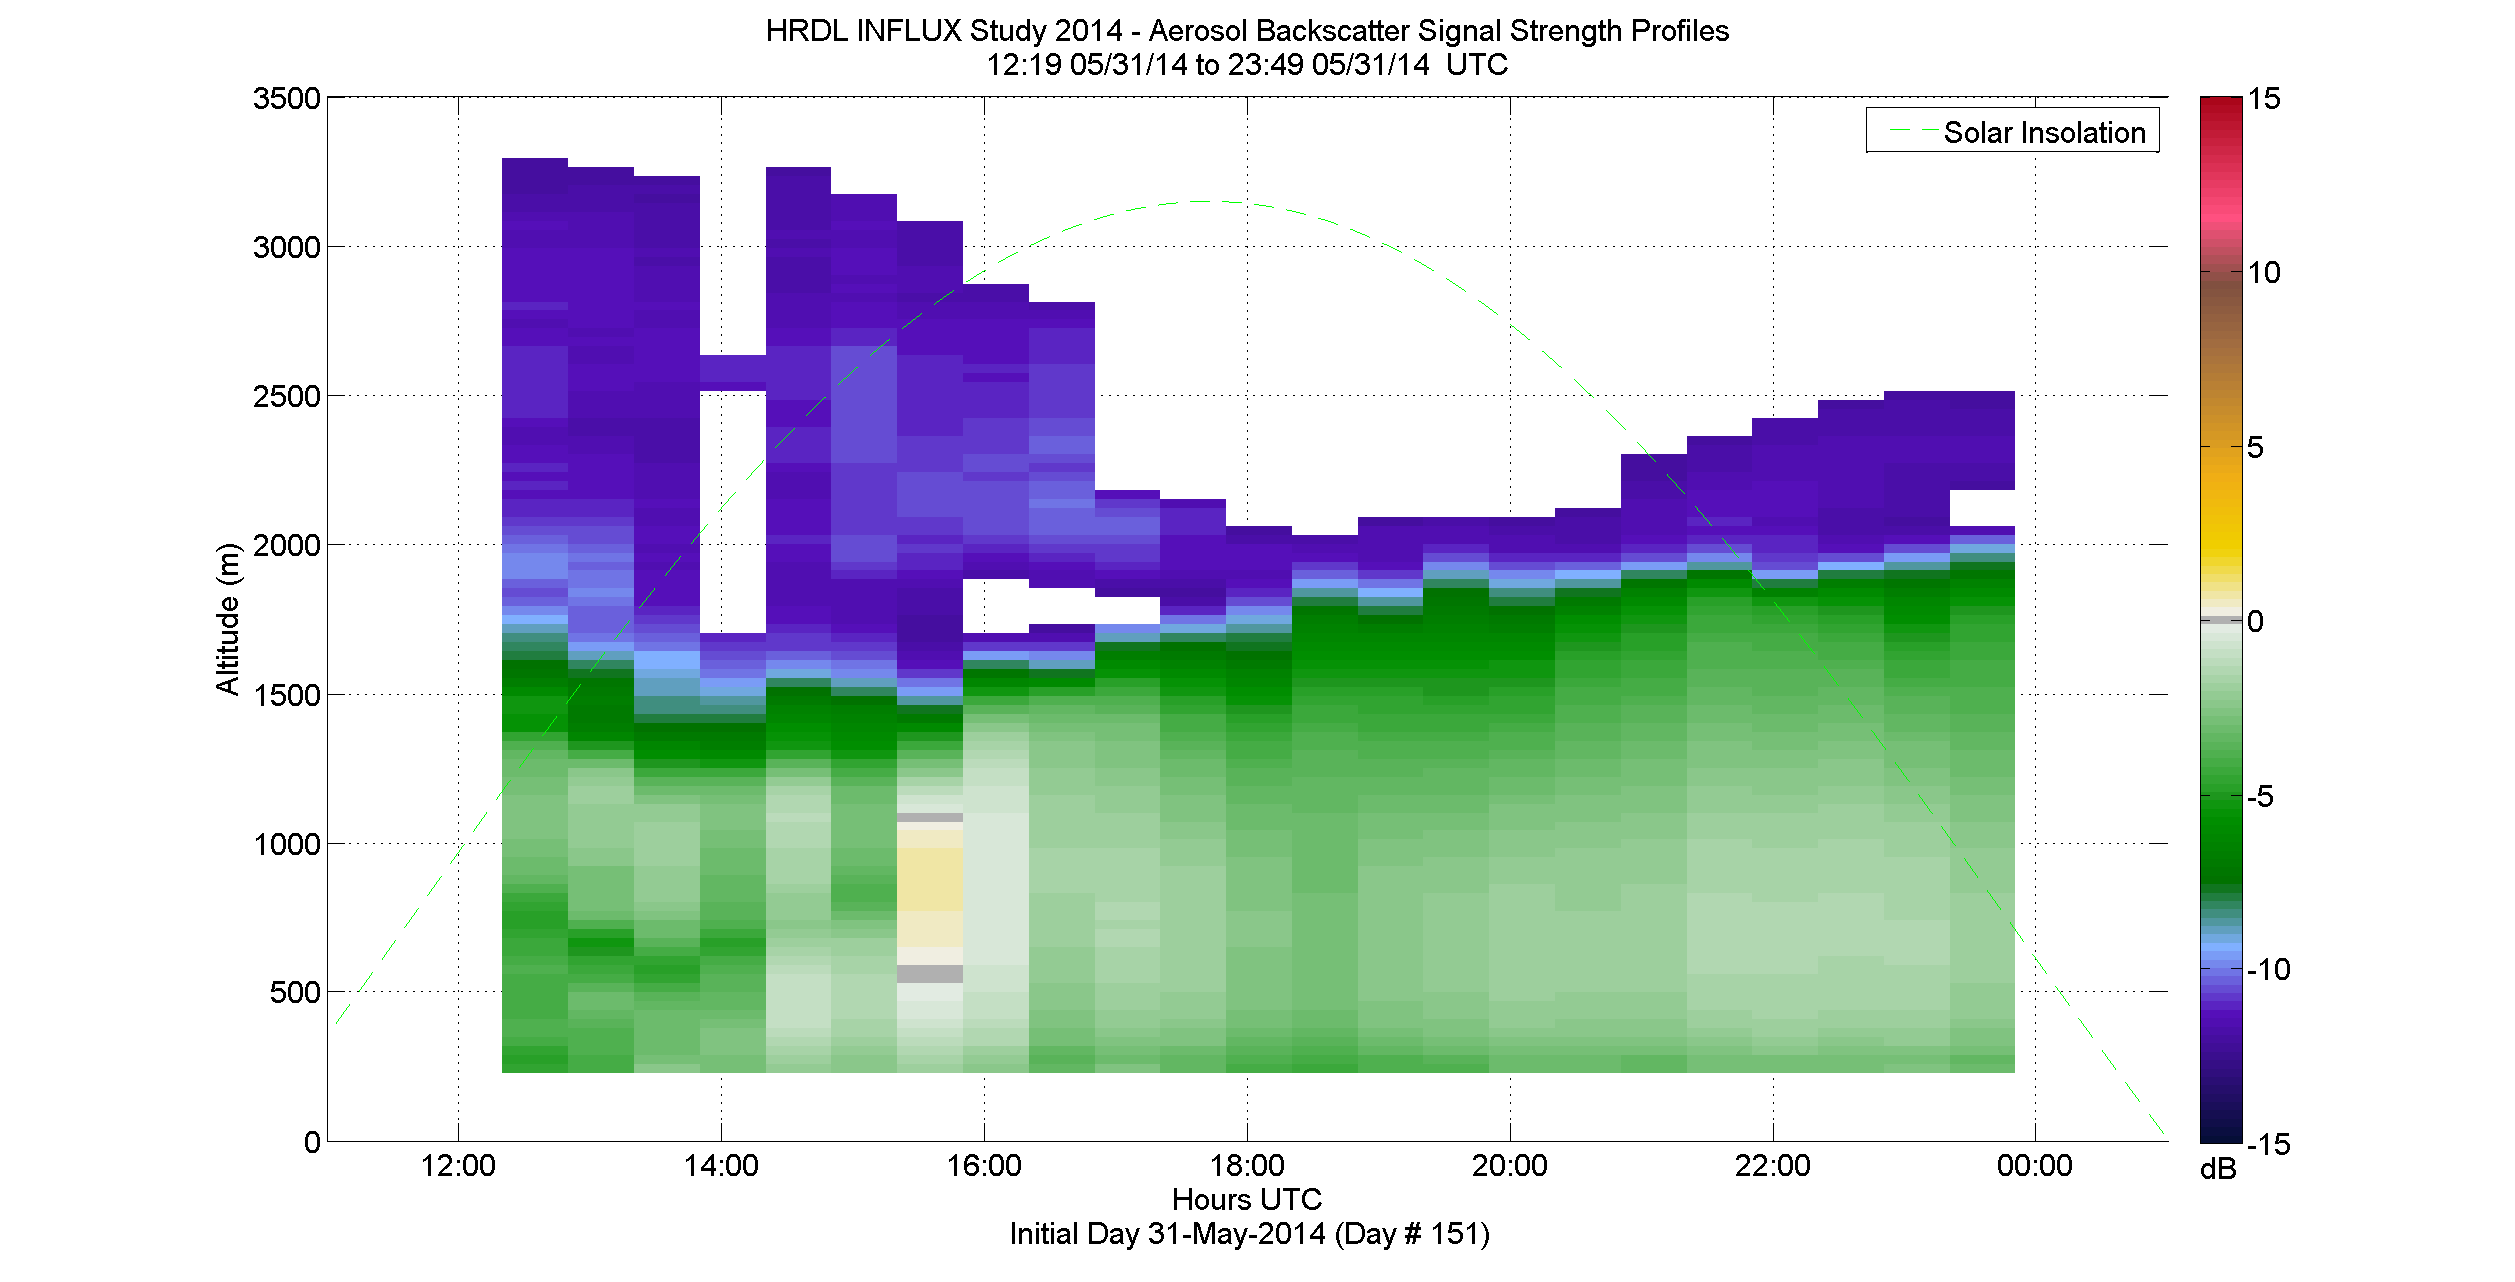 HRDL aerosol backscatter signal strength profile - May 31 pm